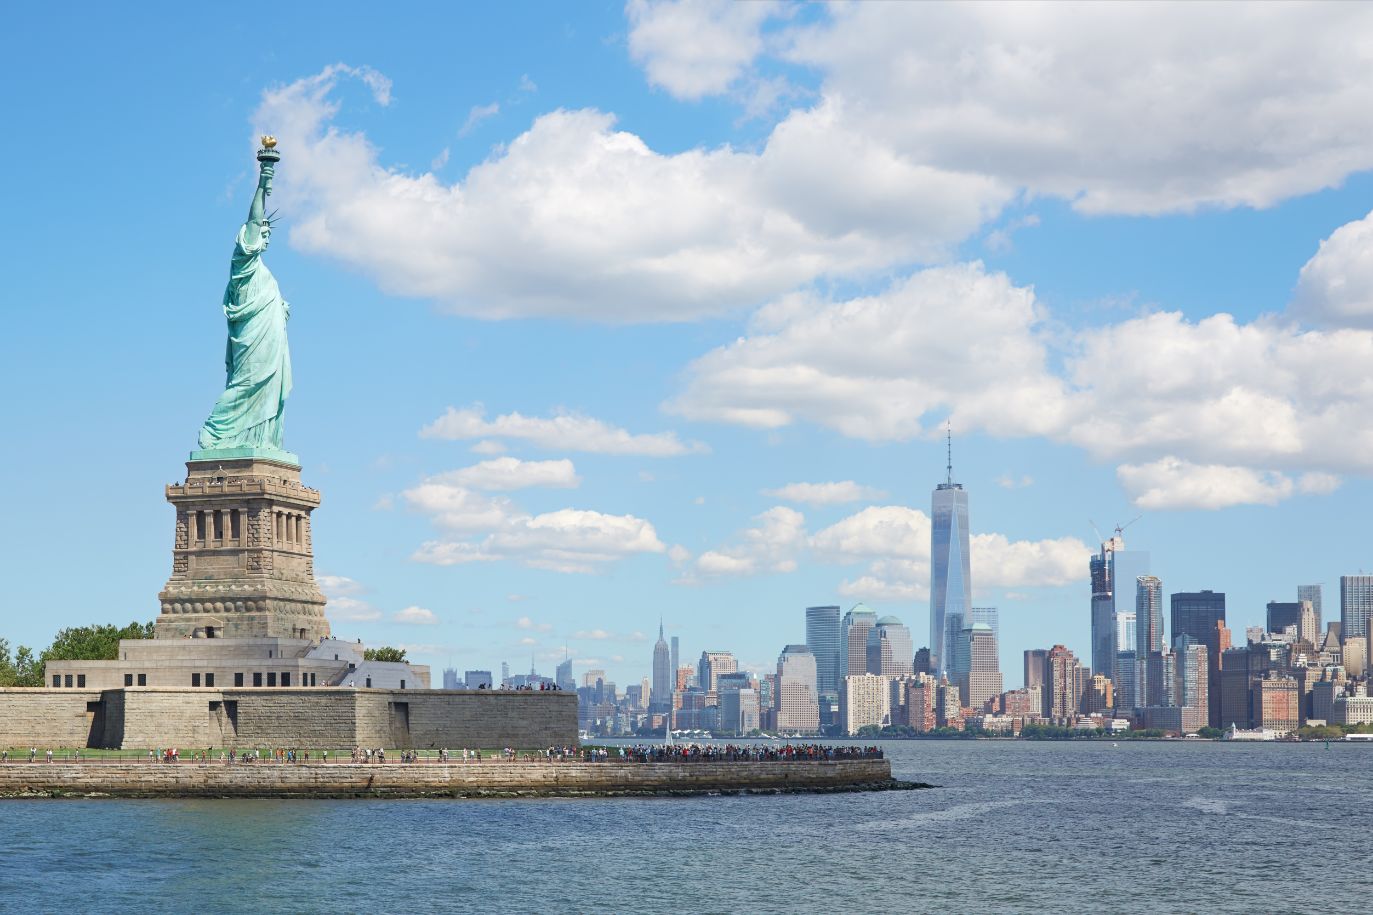 statue-of-liberty-island-and-new-york-city-skyline-2021-08-26-22-35-04-utc